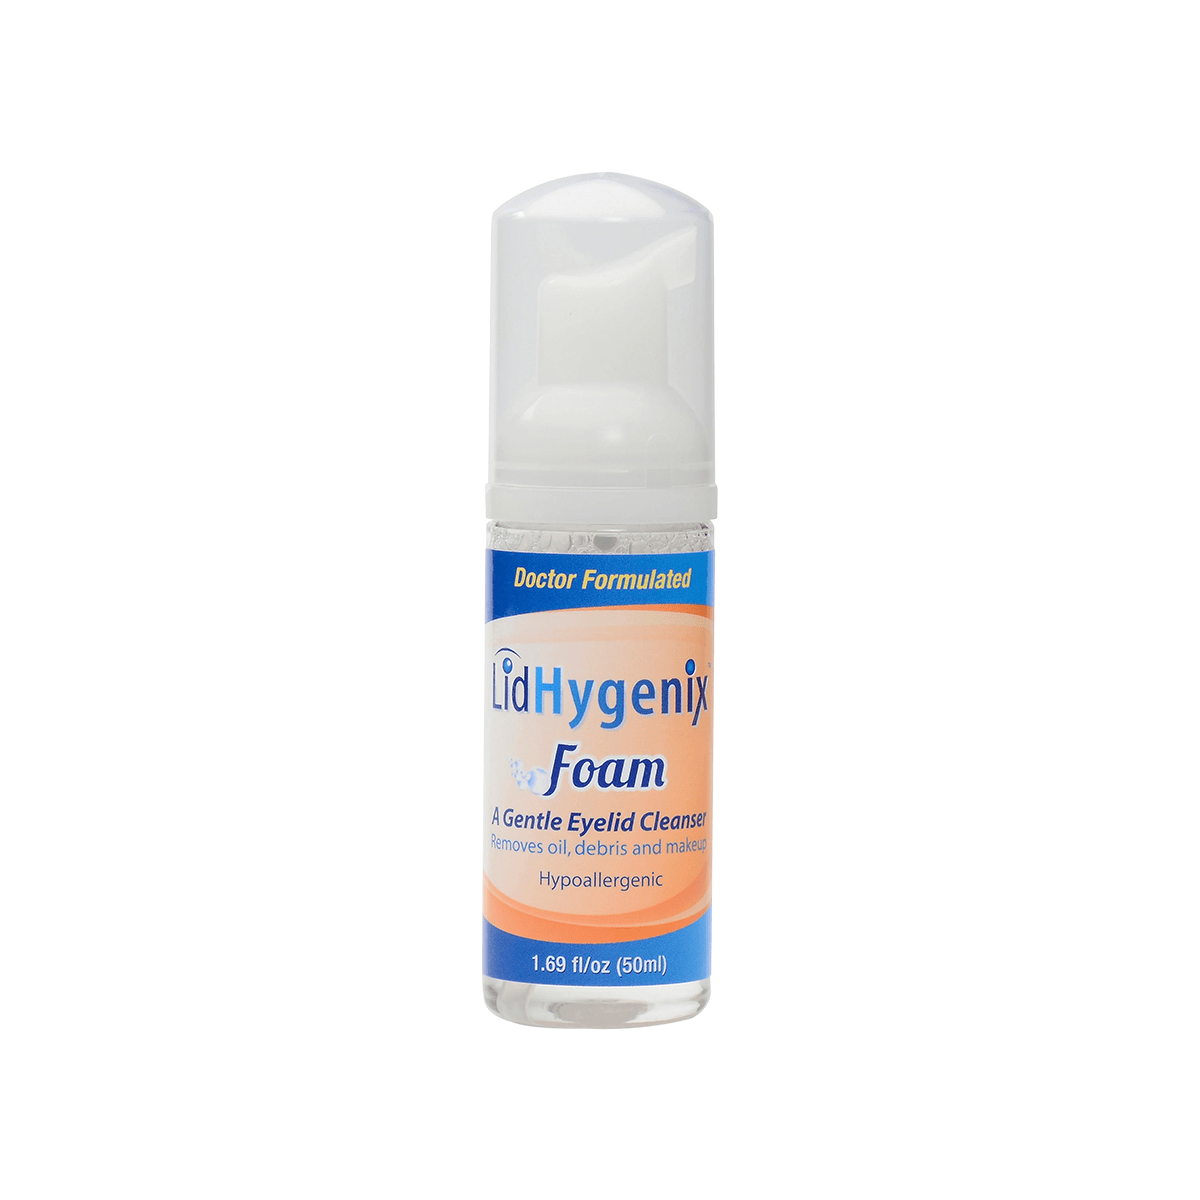 LidHygenix Gentle Foam Eyelid Cleanser, removes Oils, Debris and Makeup (50mL) - Dryeye Rescue